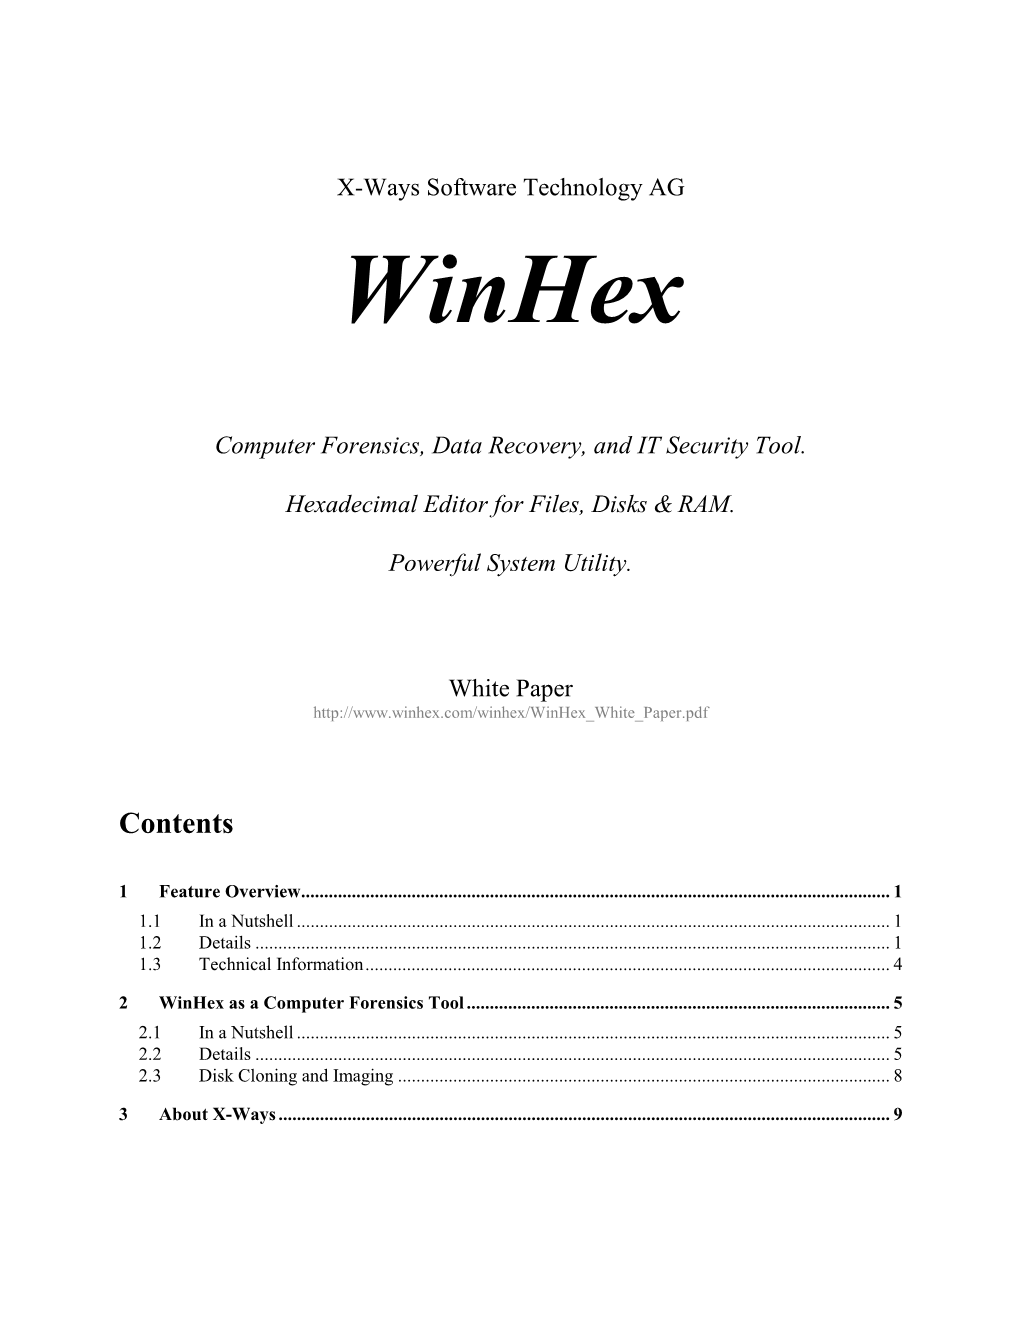 Winhex White Paper